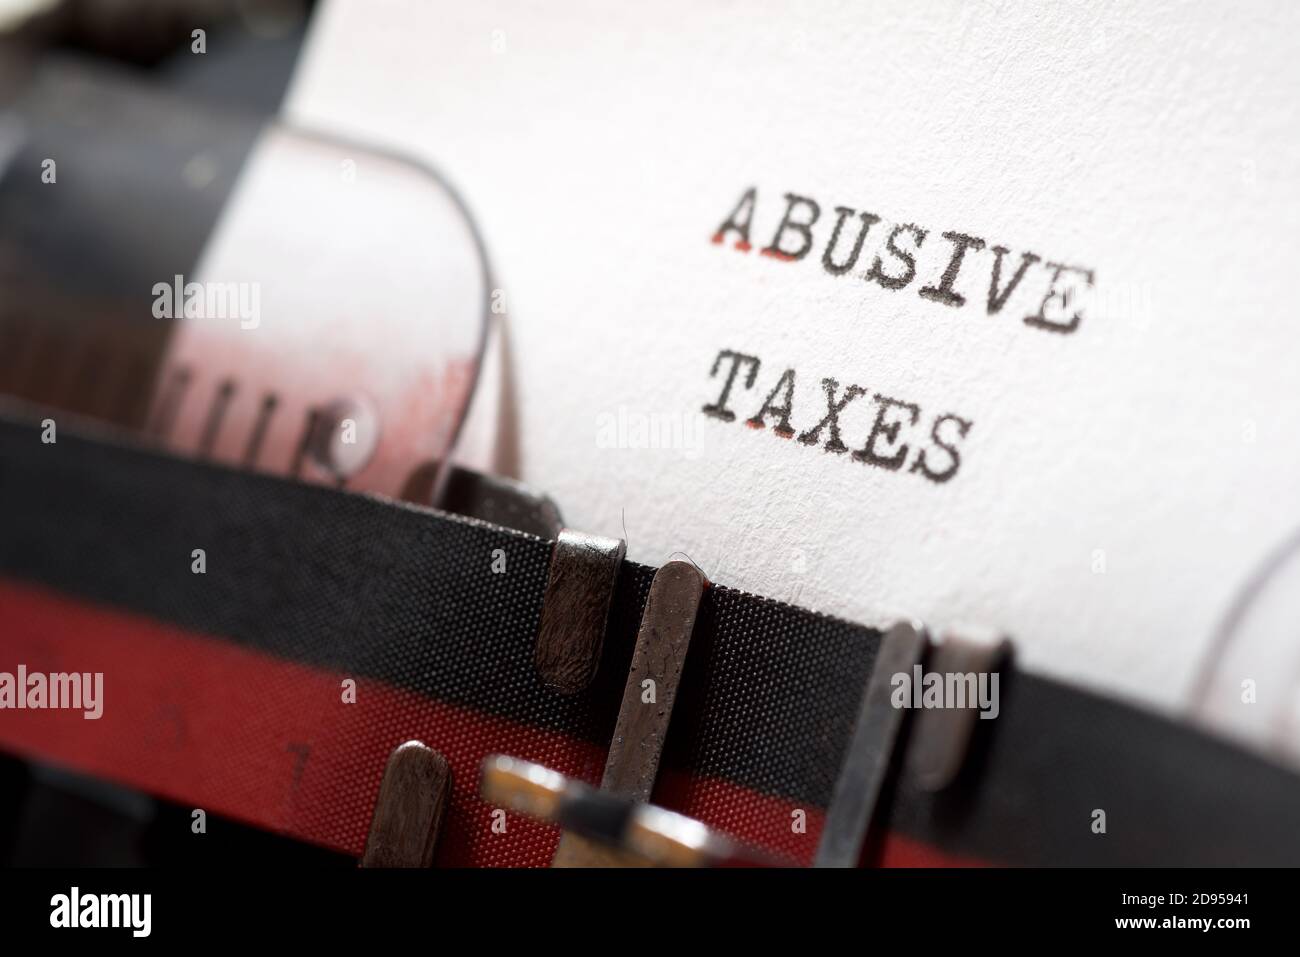 Abusive taxes phrase written with a typewriter. Stock Photo